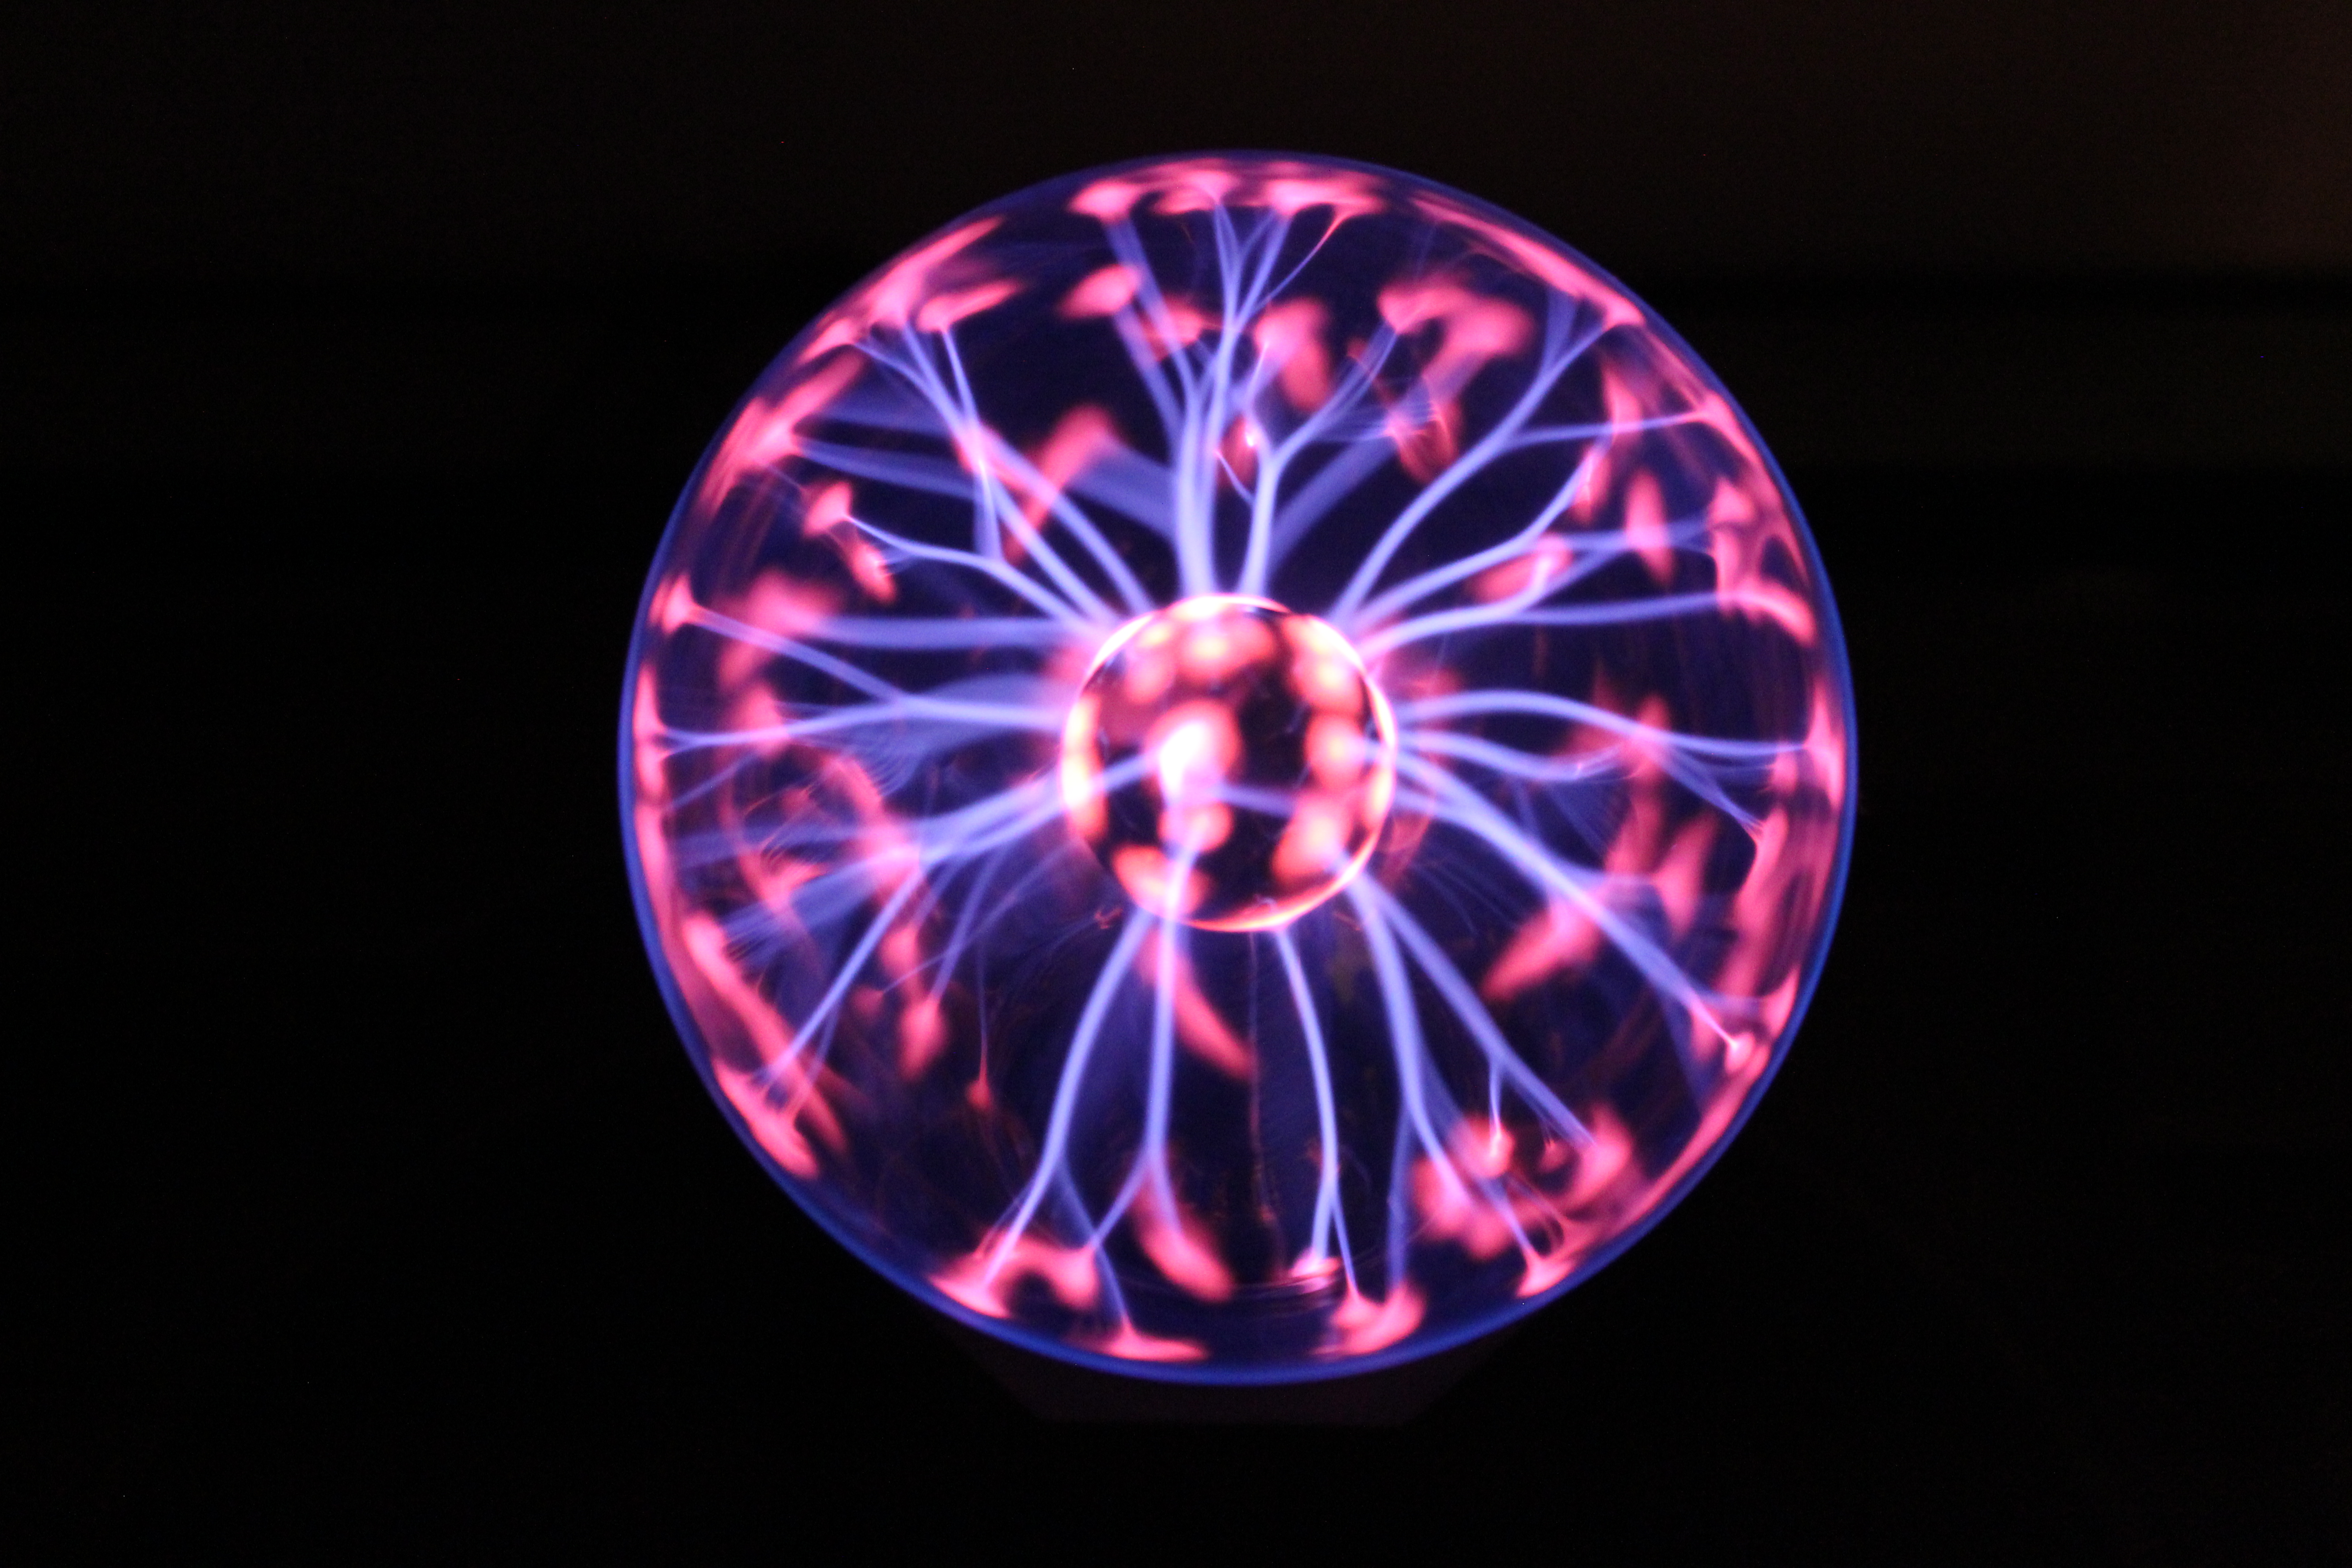 File:Plasmakugel (Plasma Ball).JPG - Wikimedia Commons